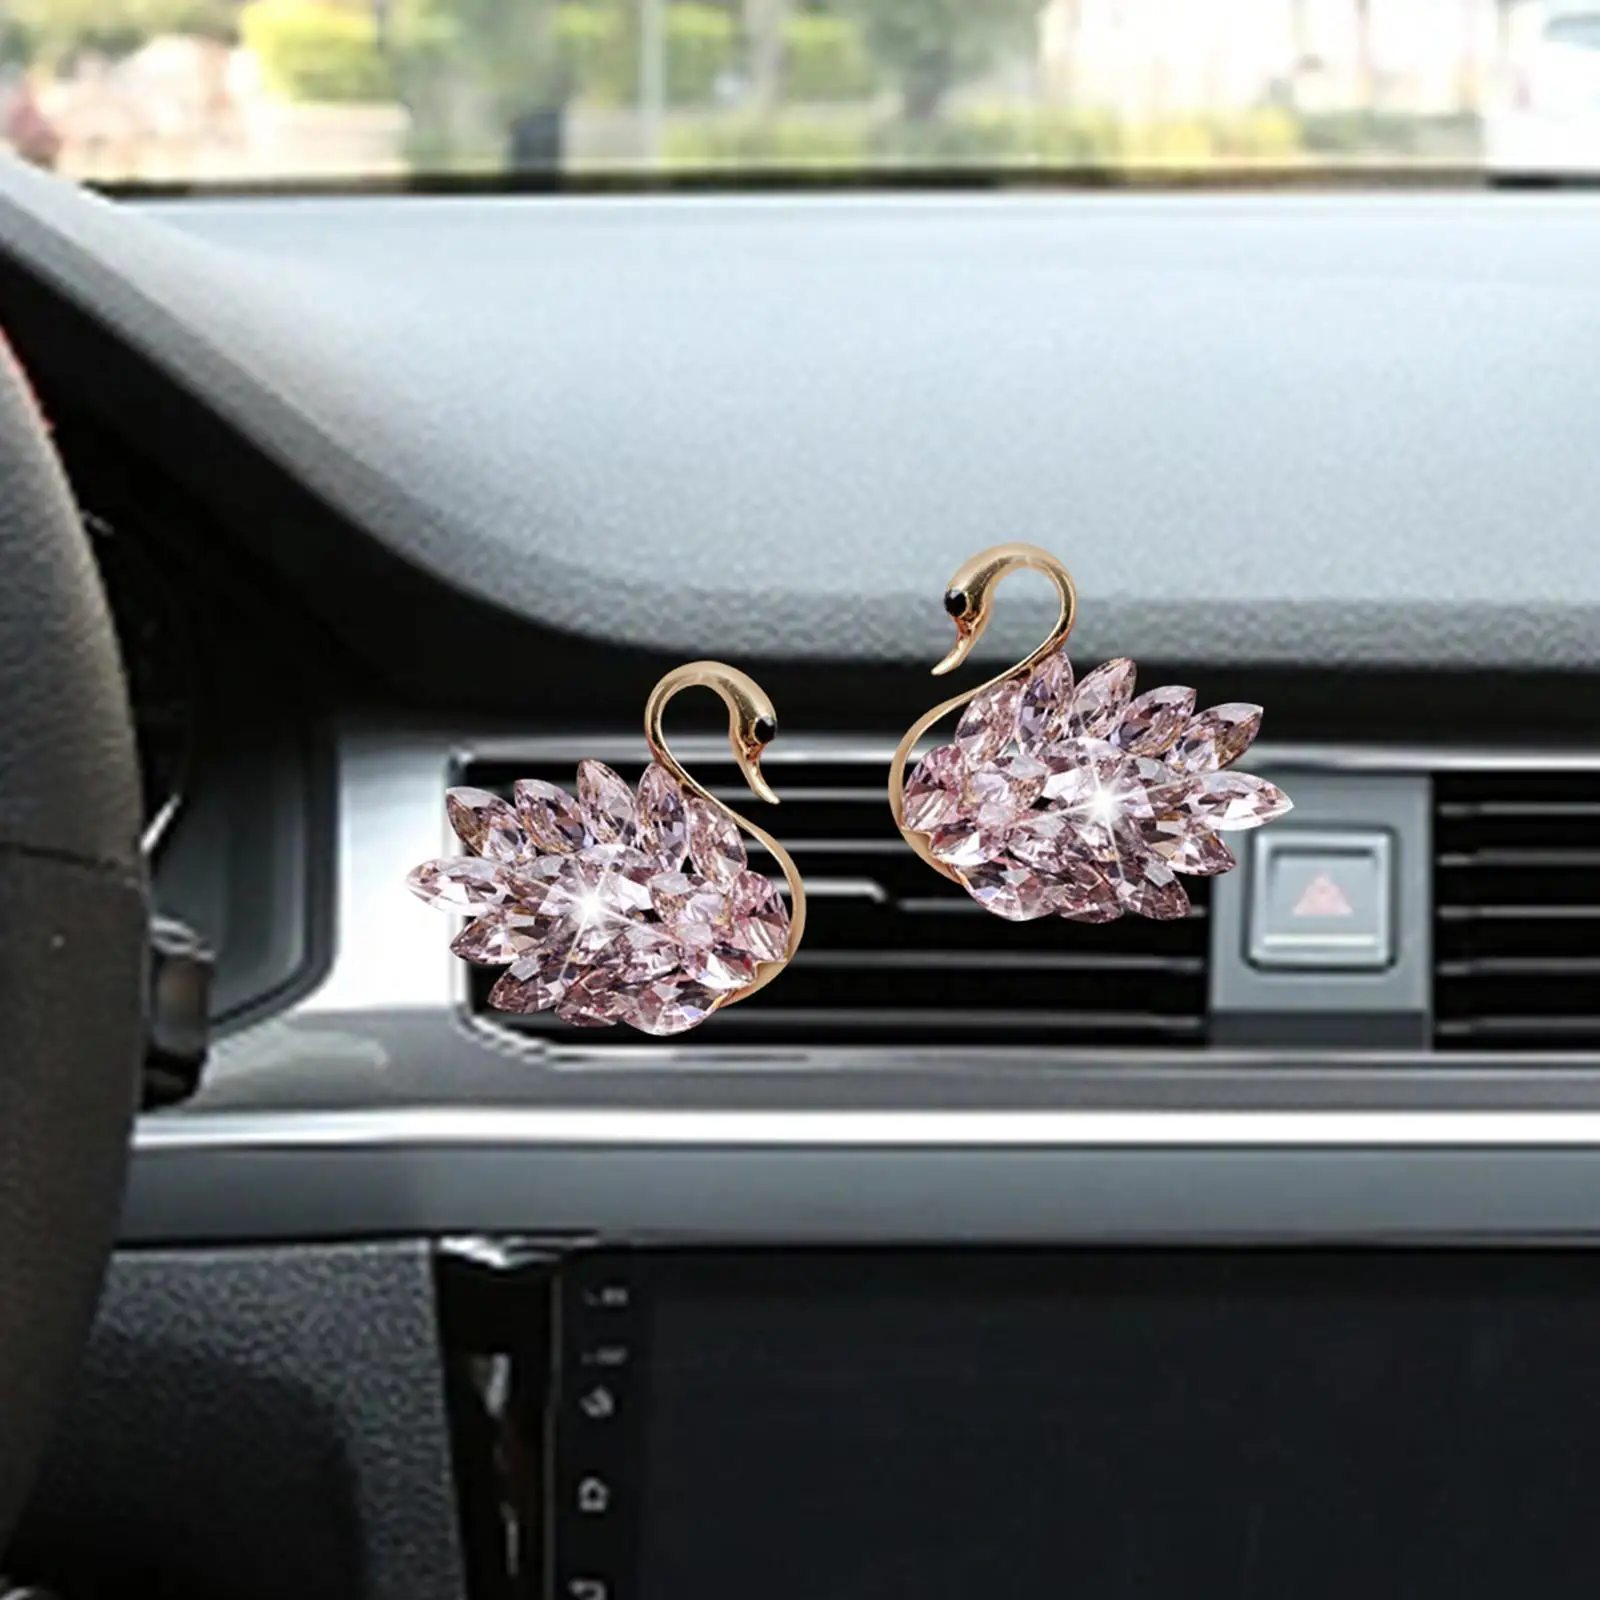 2 Pieces Car Air Outlet Diffuser Car Supplies Decoration Accessories Creative Metal Car Fragrance Auto Clip Swan Shape